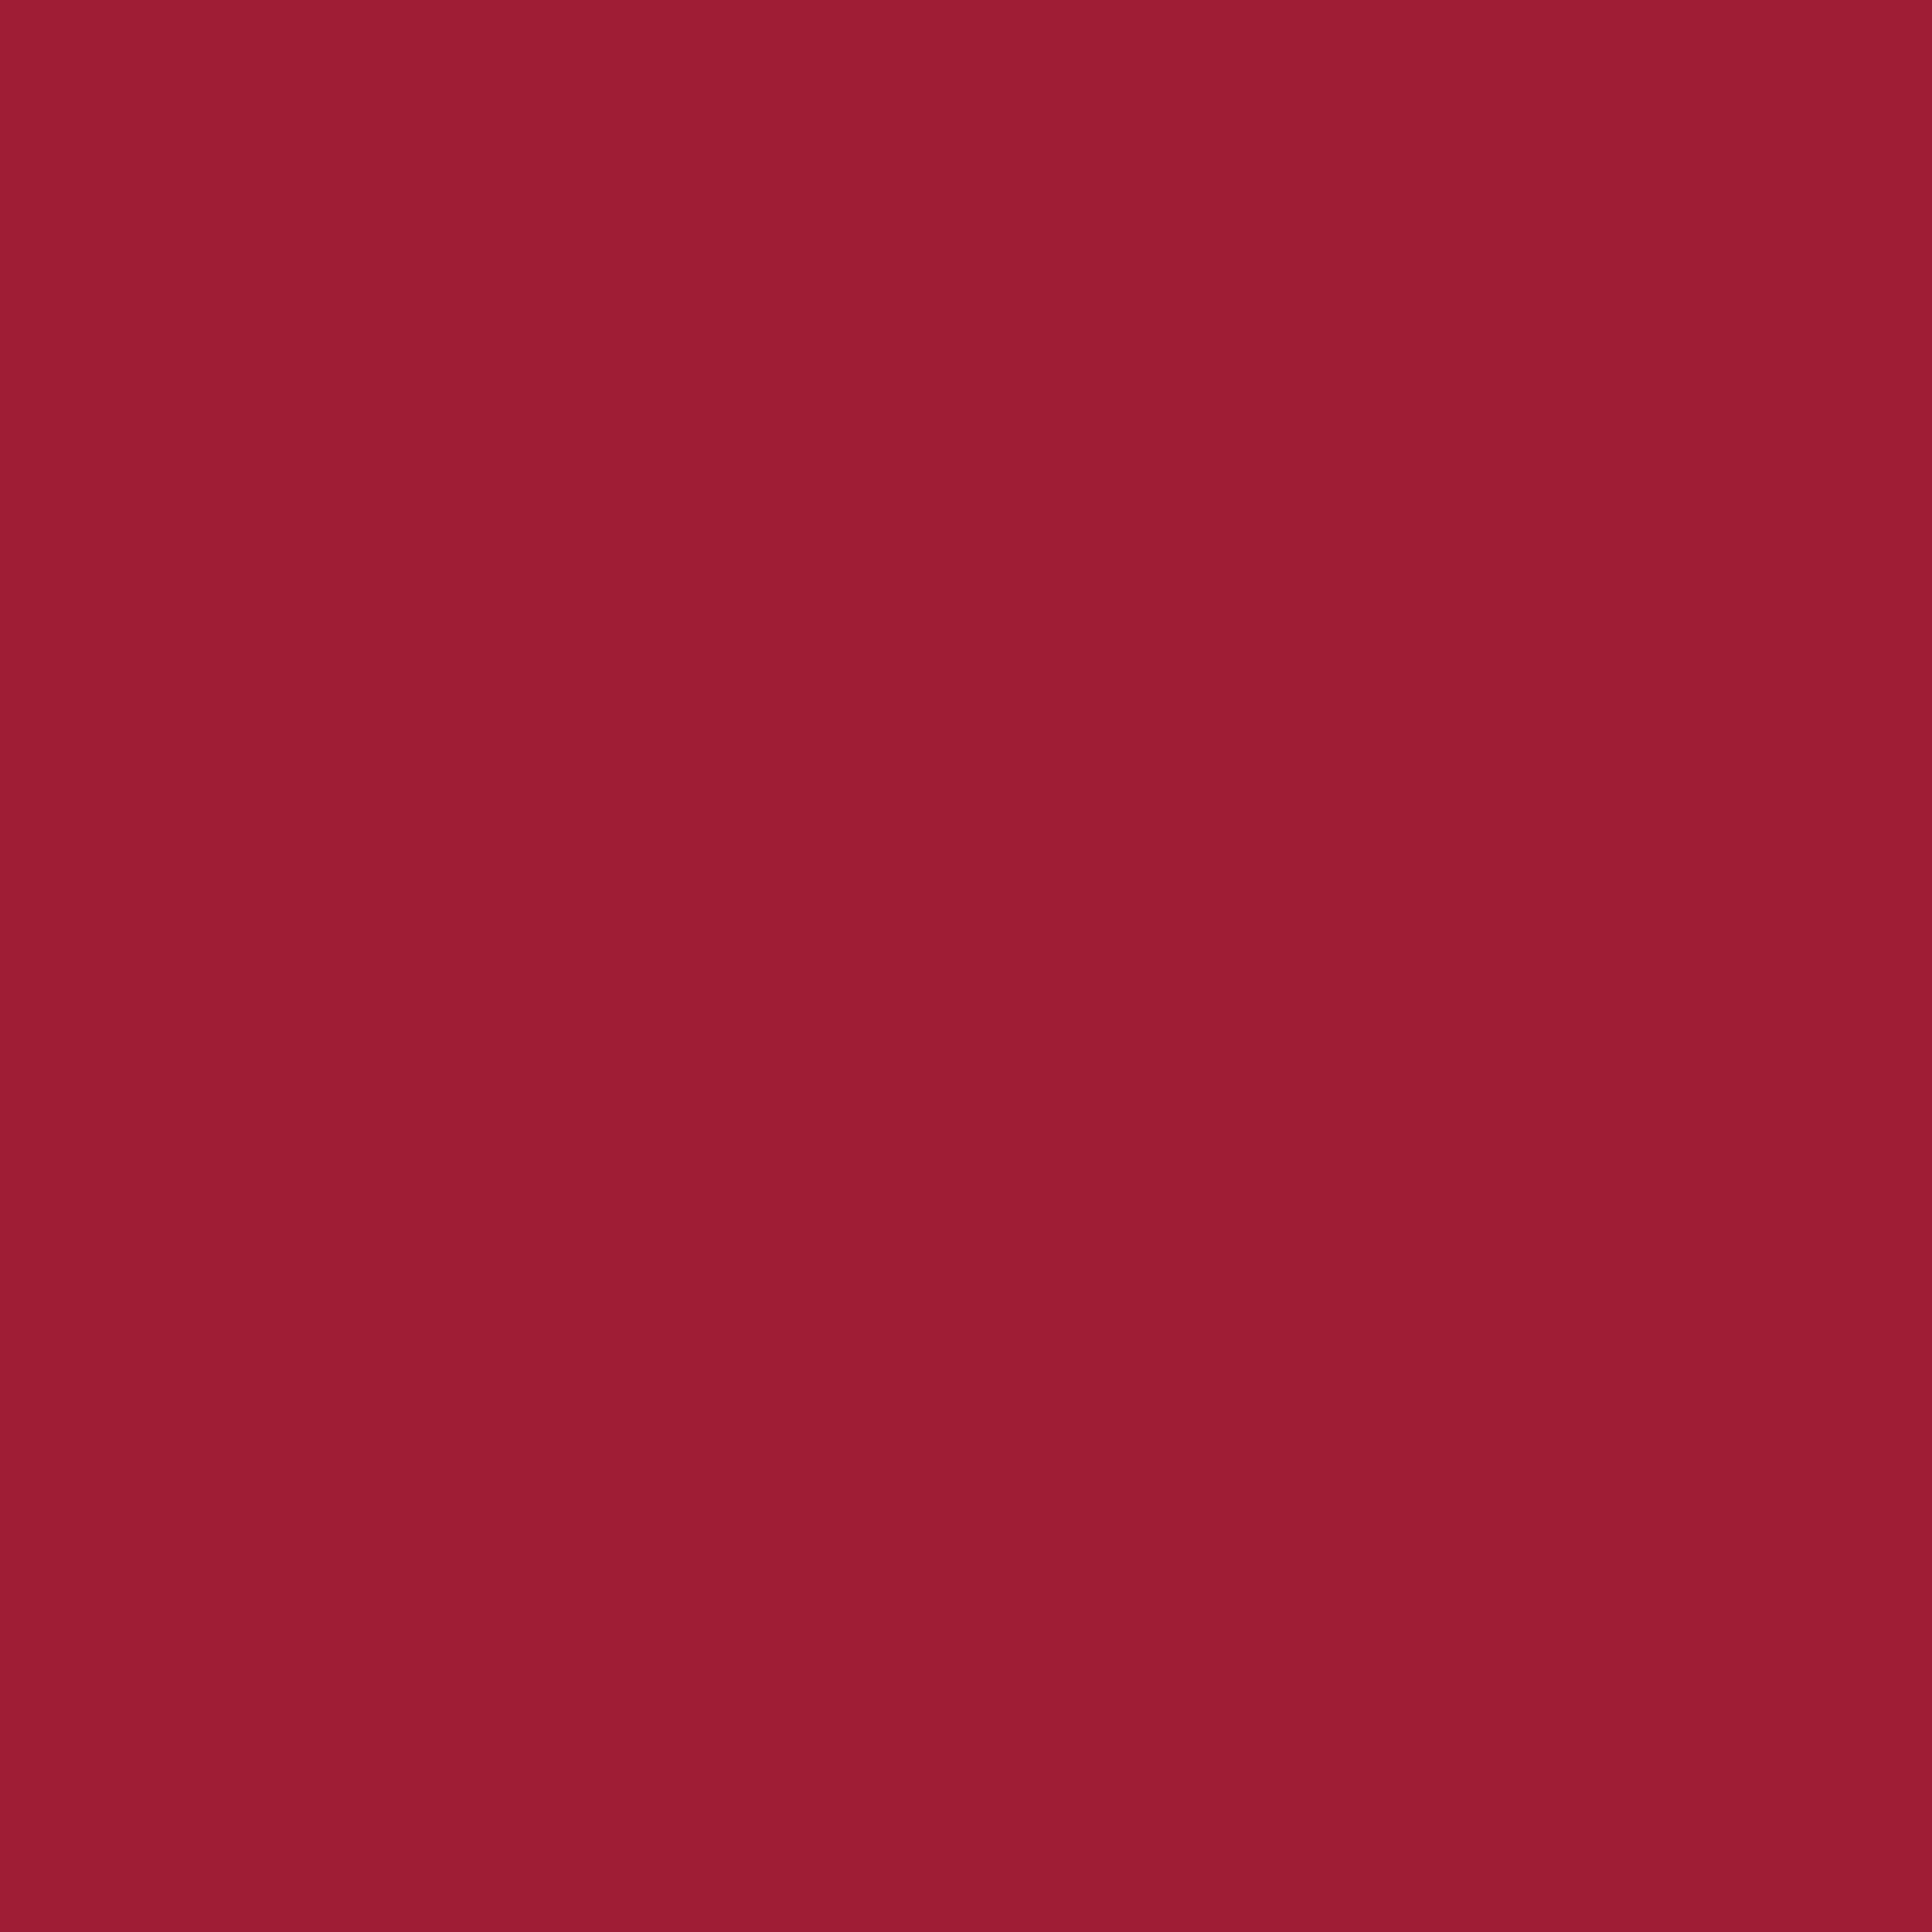 2048x2048 Vivid Burgundy Solid Color Background